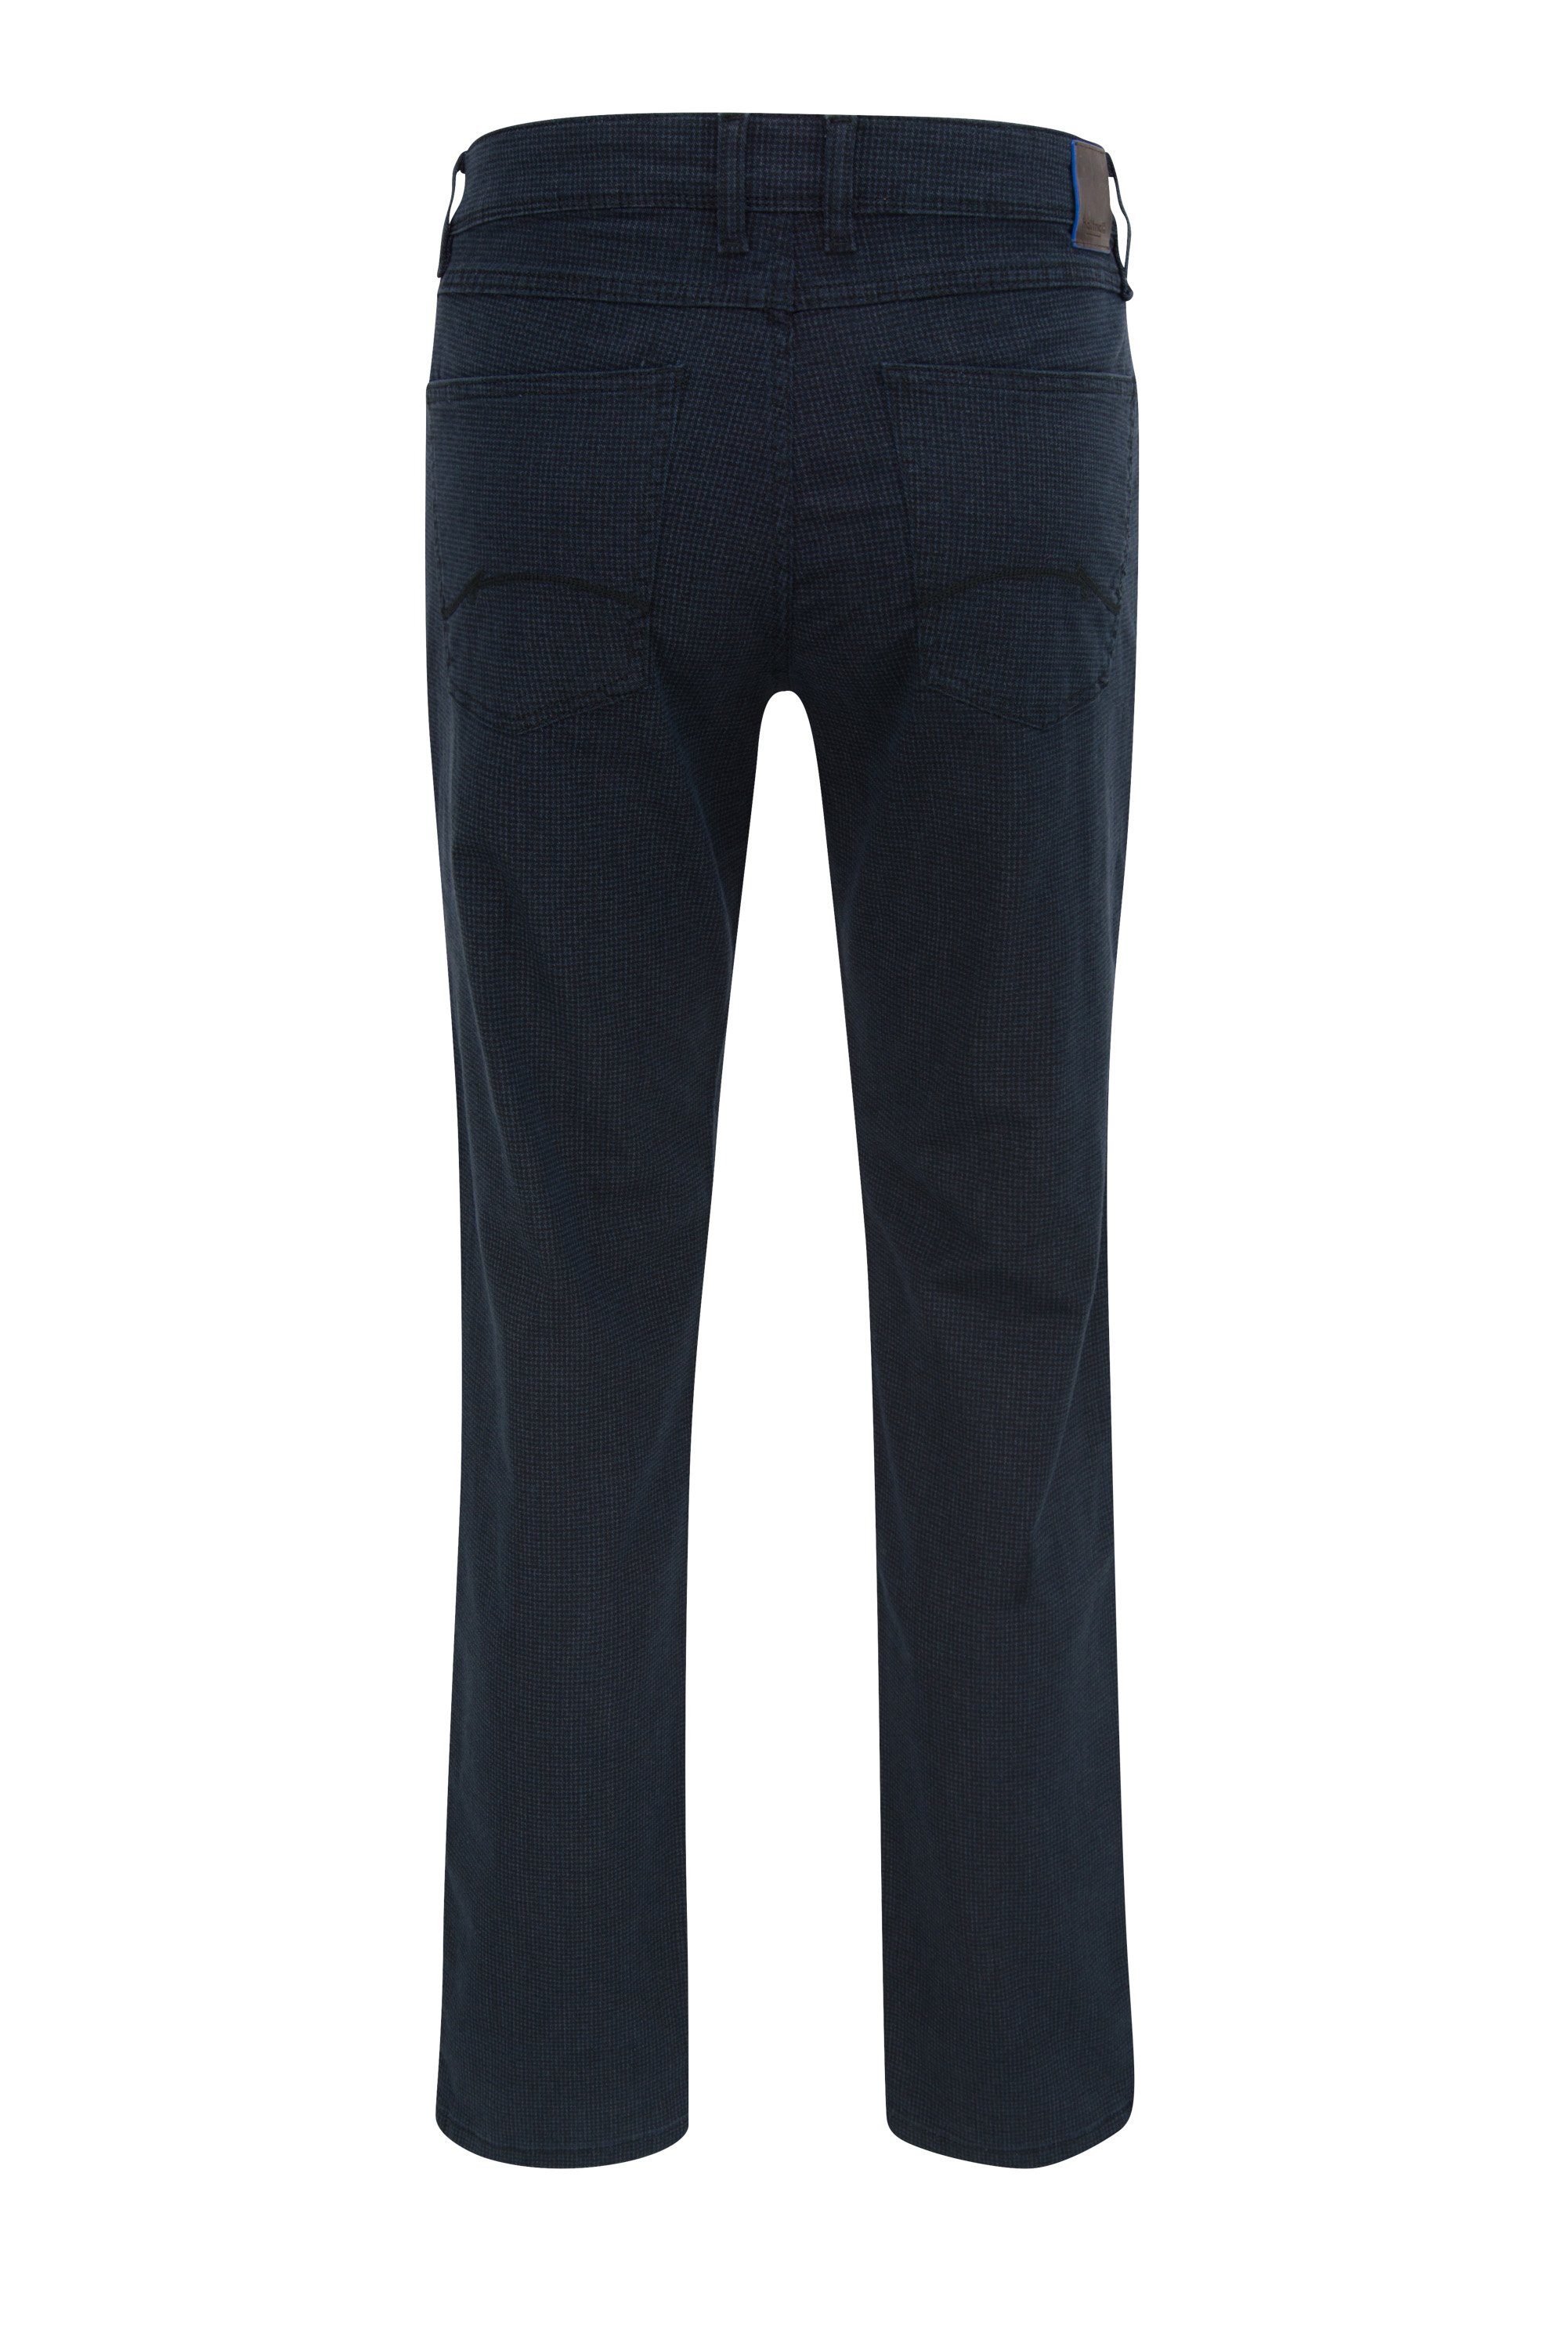 Hattric 5-Pocket-Jeans HATTRIC HUNTER blue 688085 - LOOK pepi 6255.40 WOOLEN